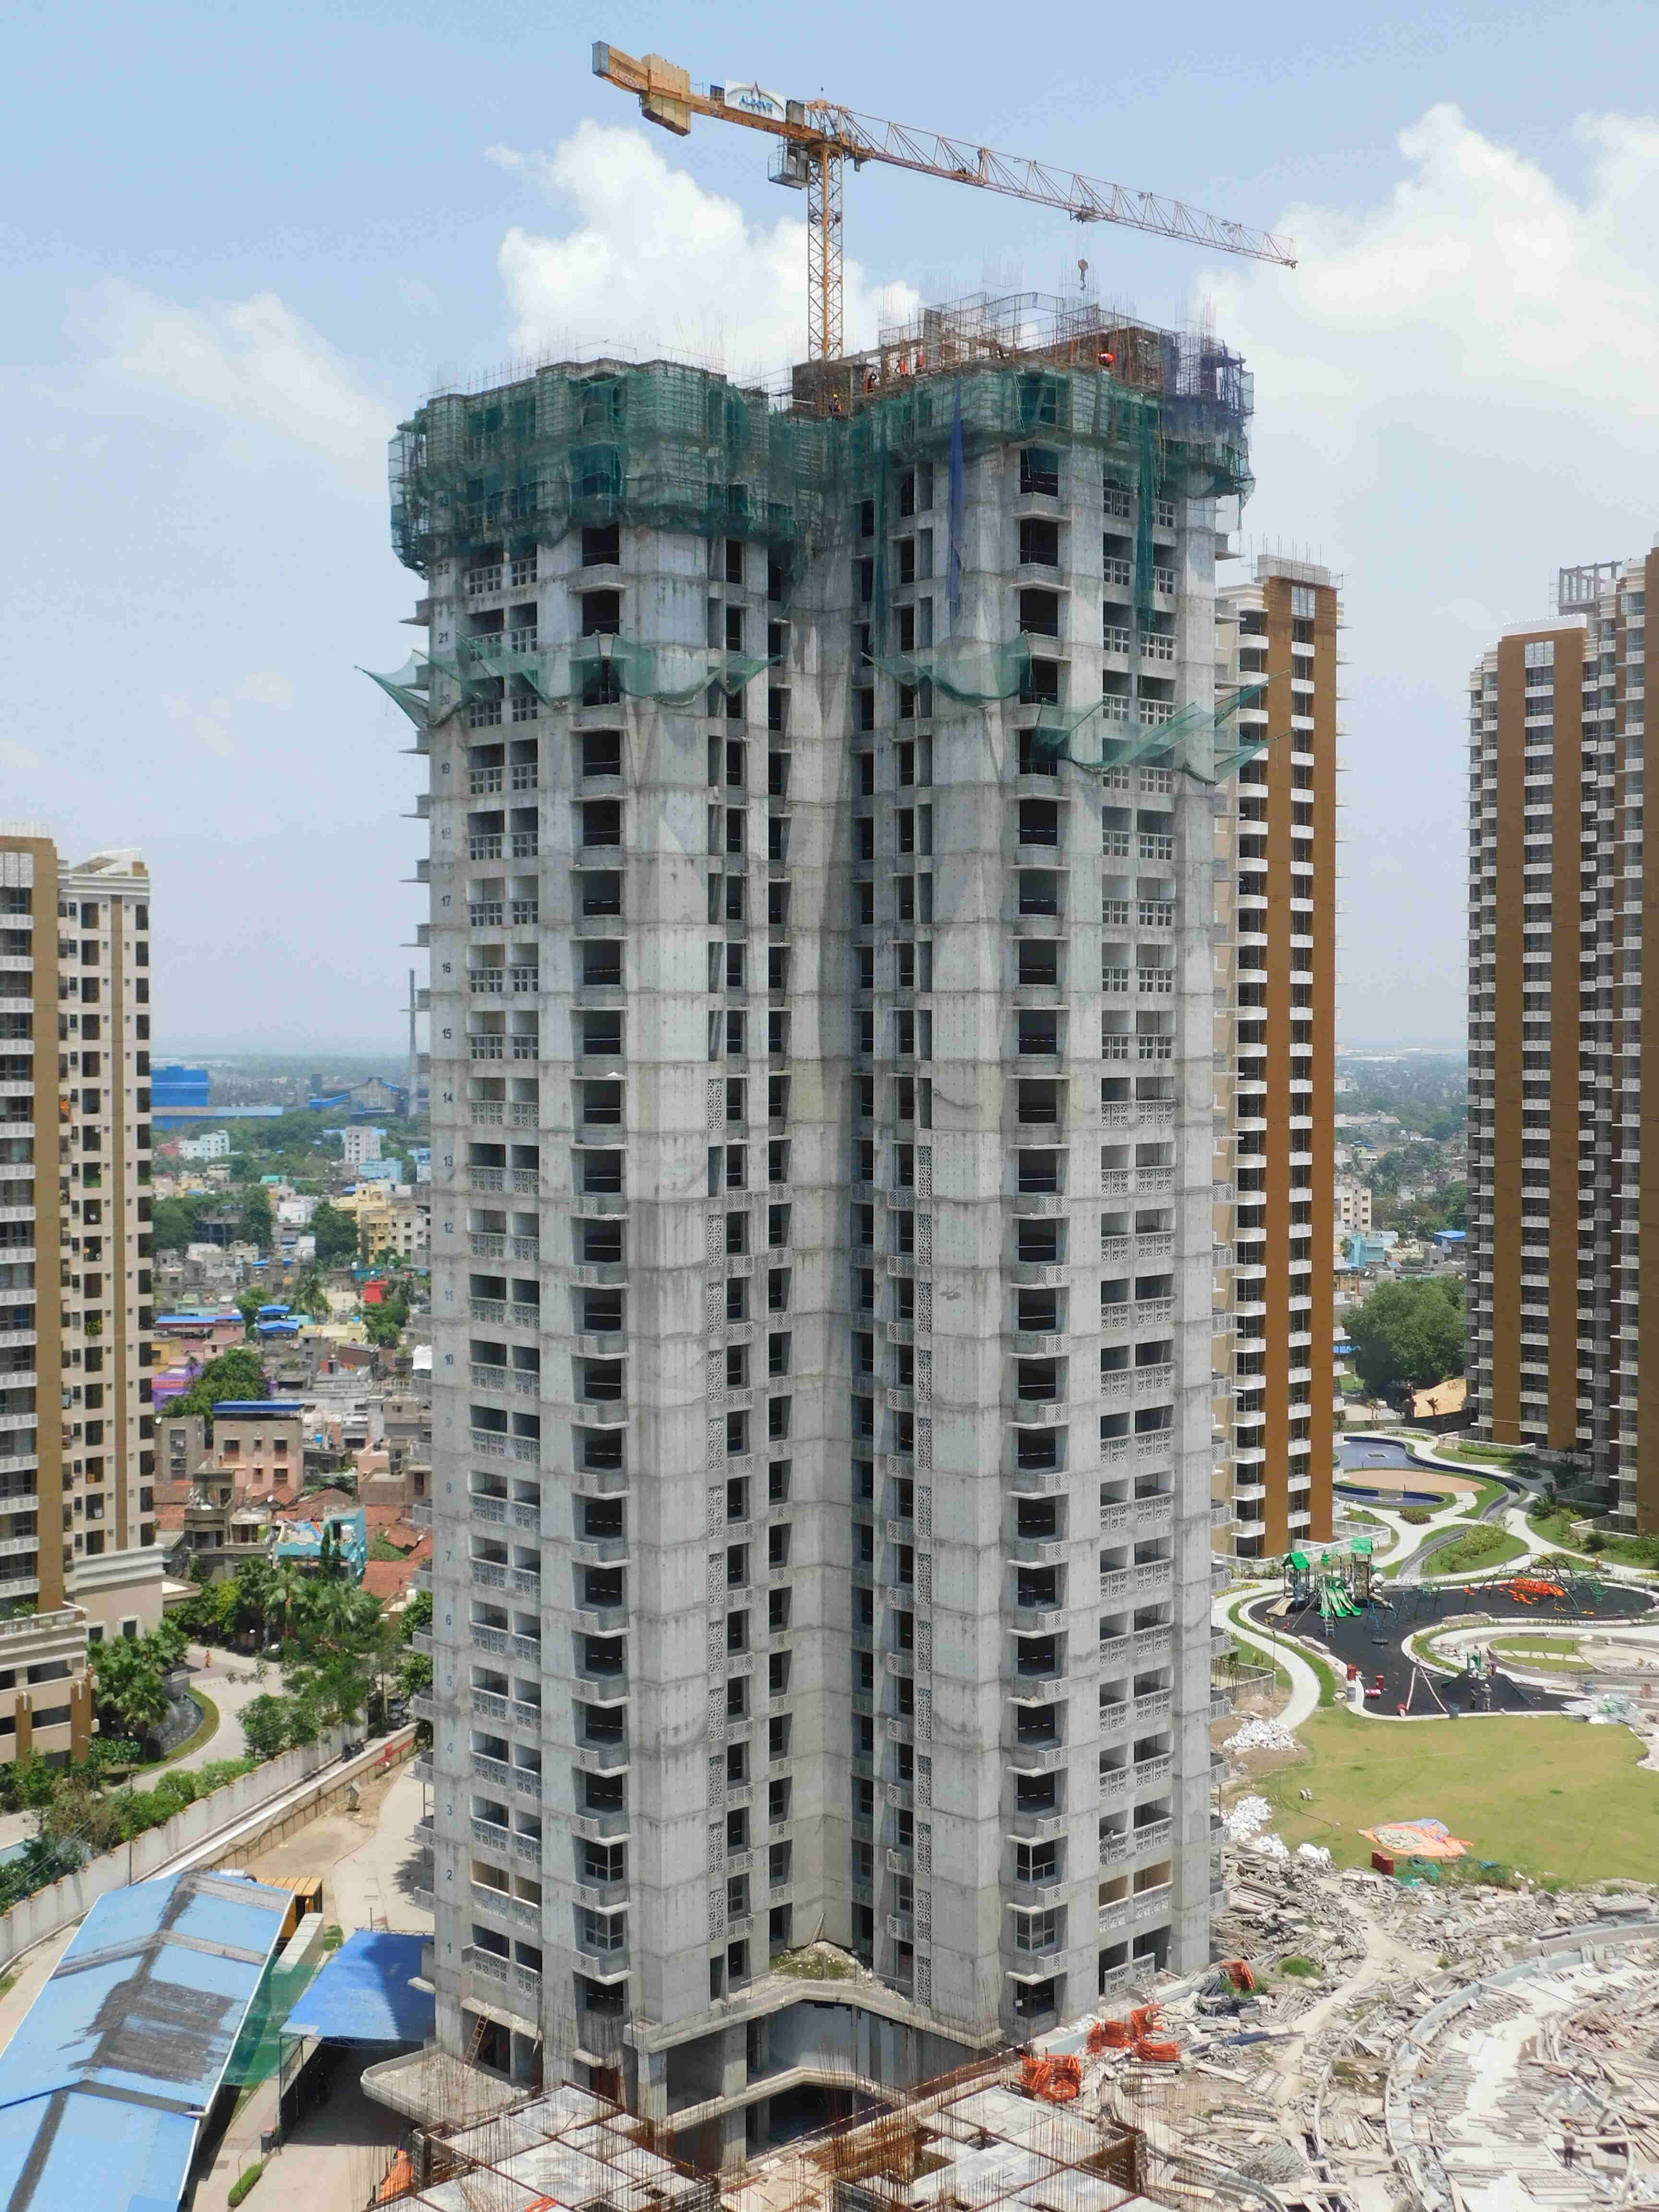 Sangam Tower 12 25th Floor Roof Casting work in progress